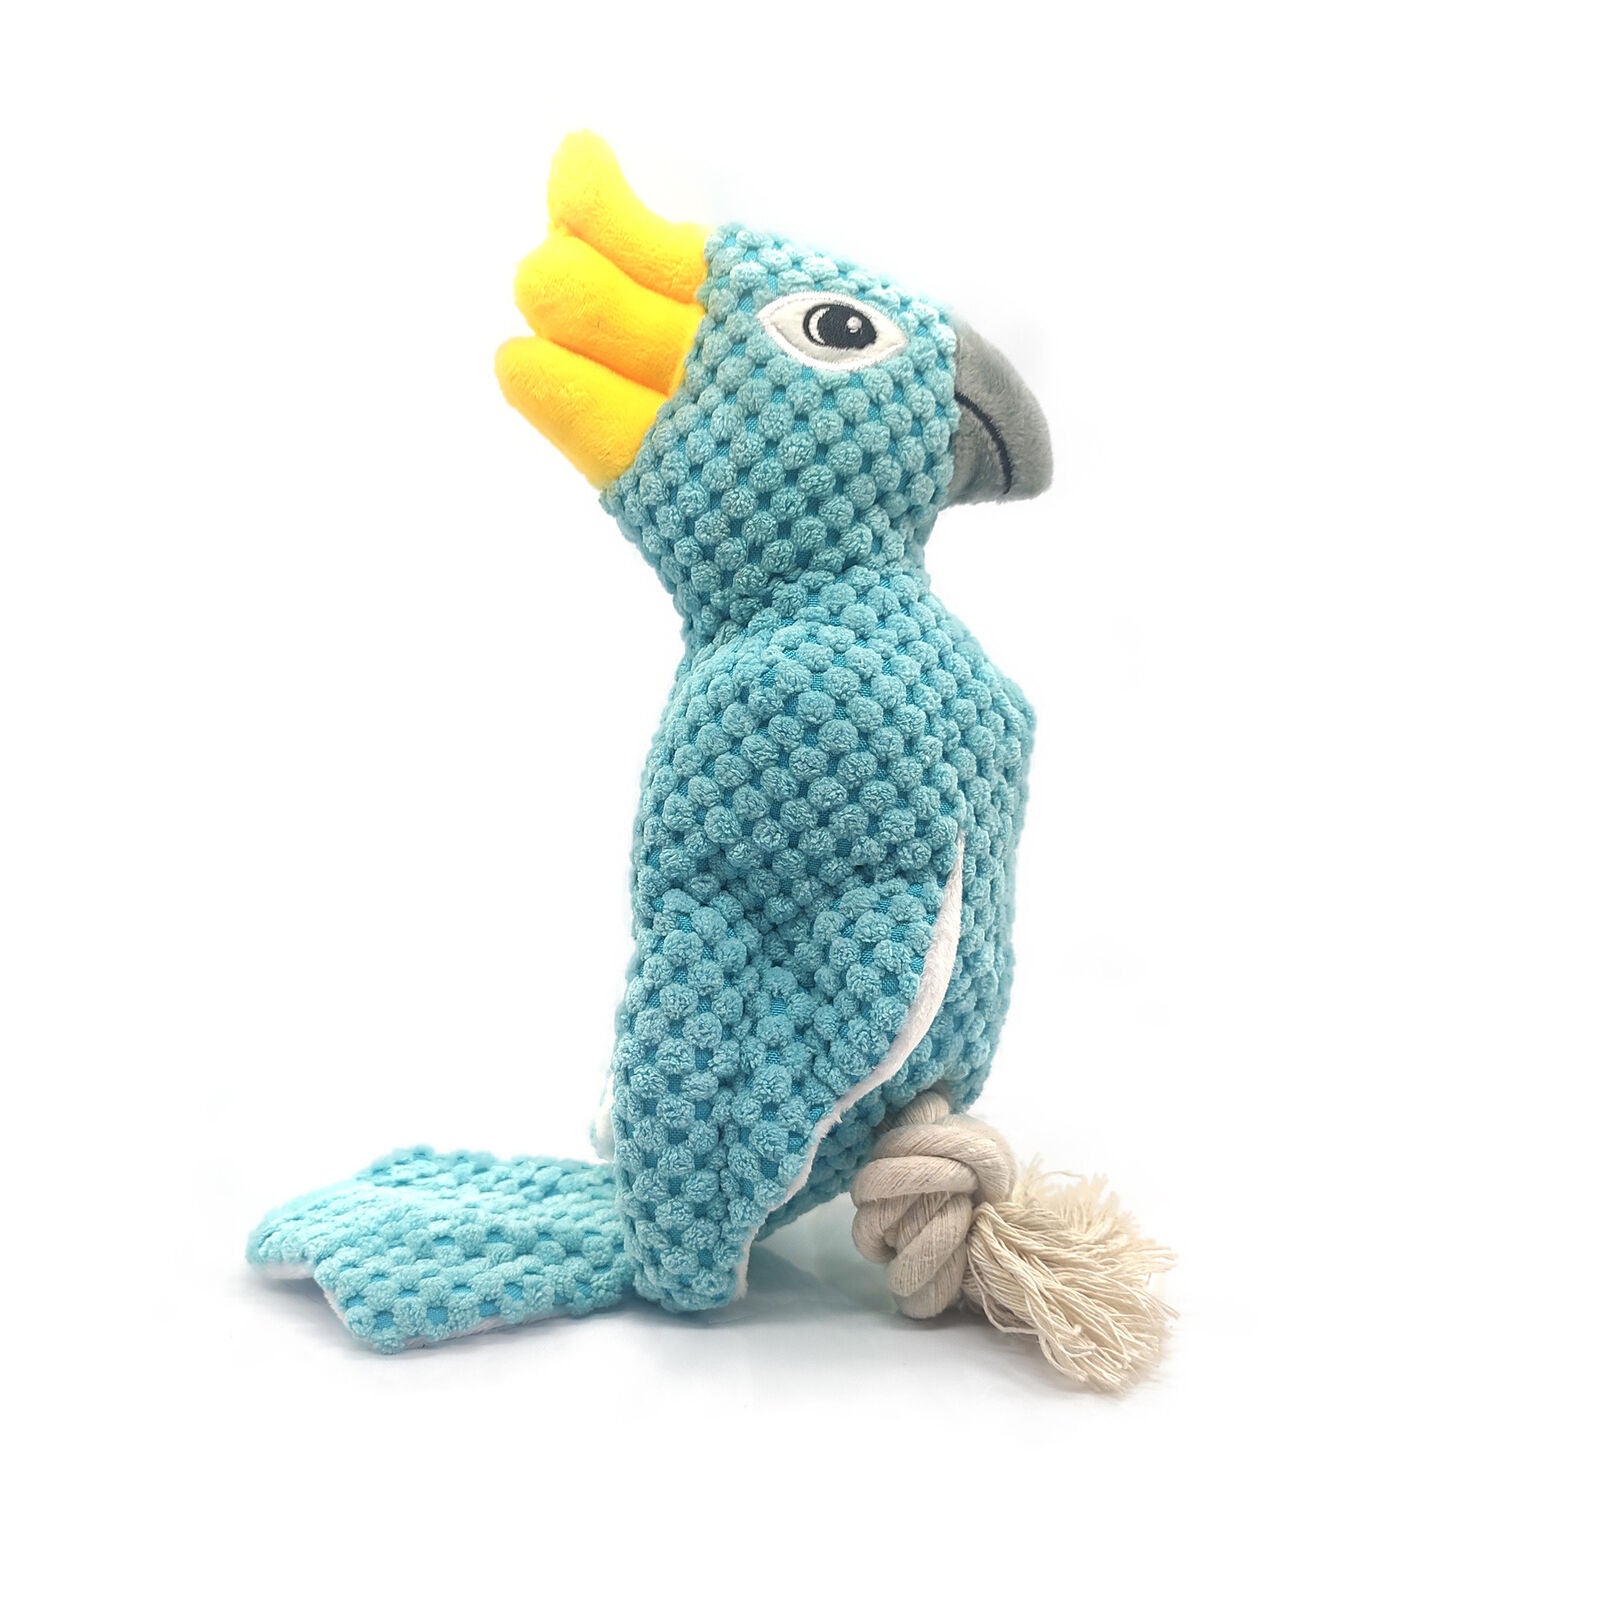 Plush Bird & Rope Dog Toy, Hobby Lobby